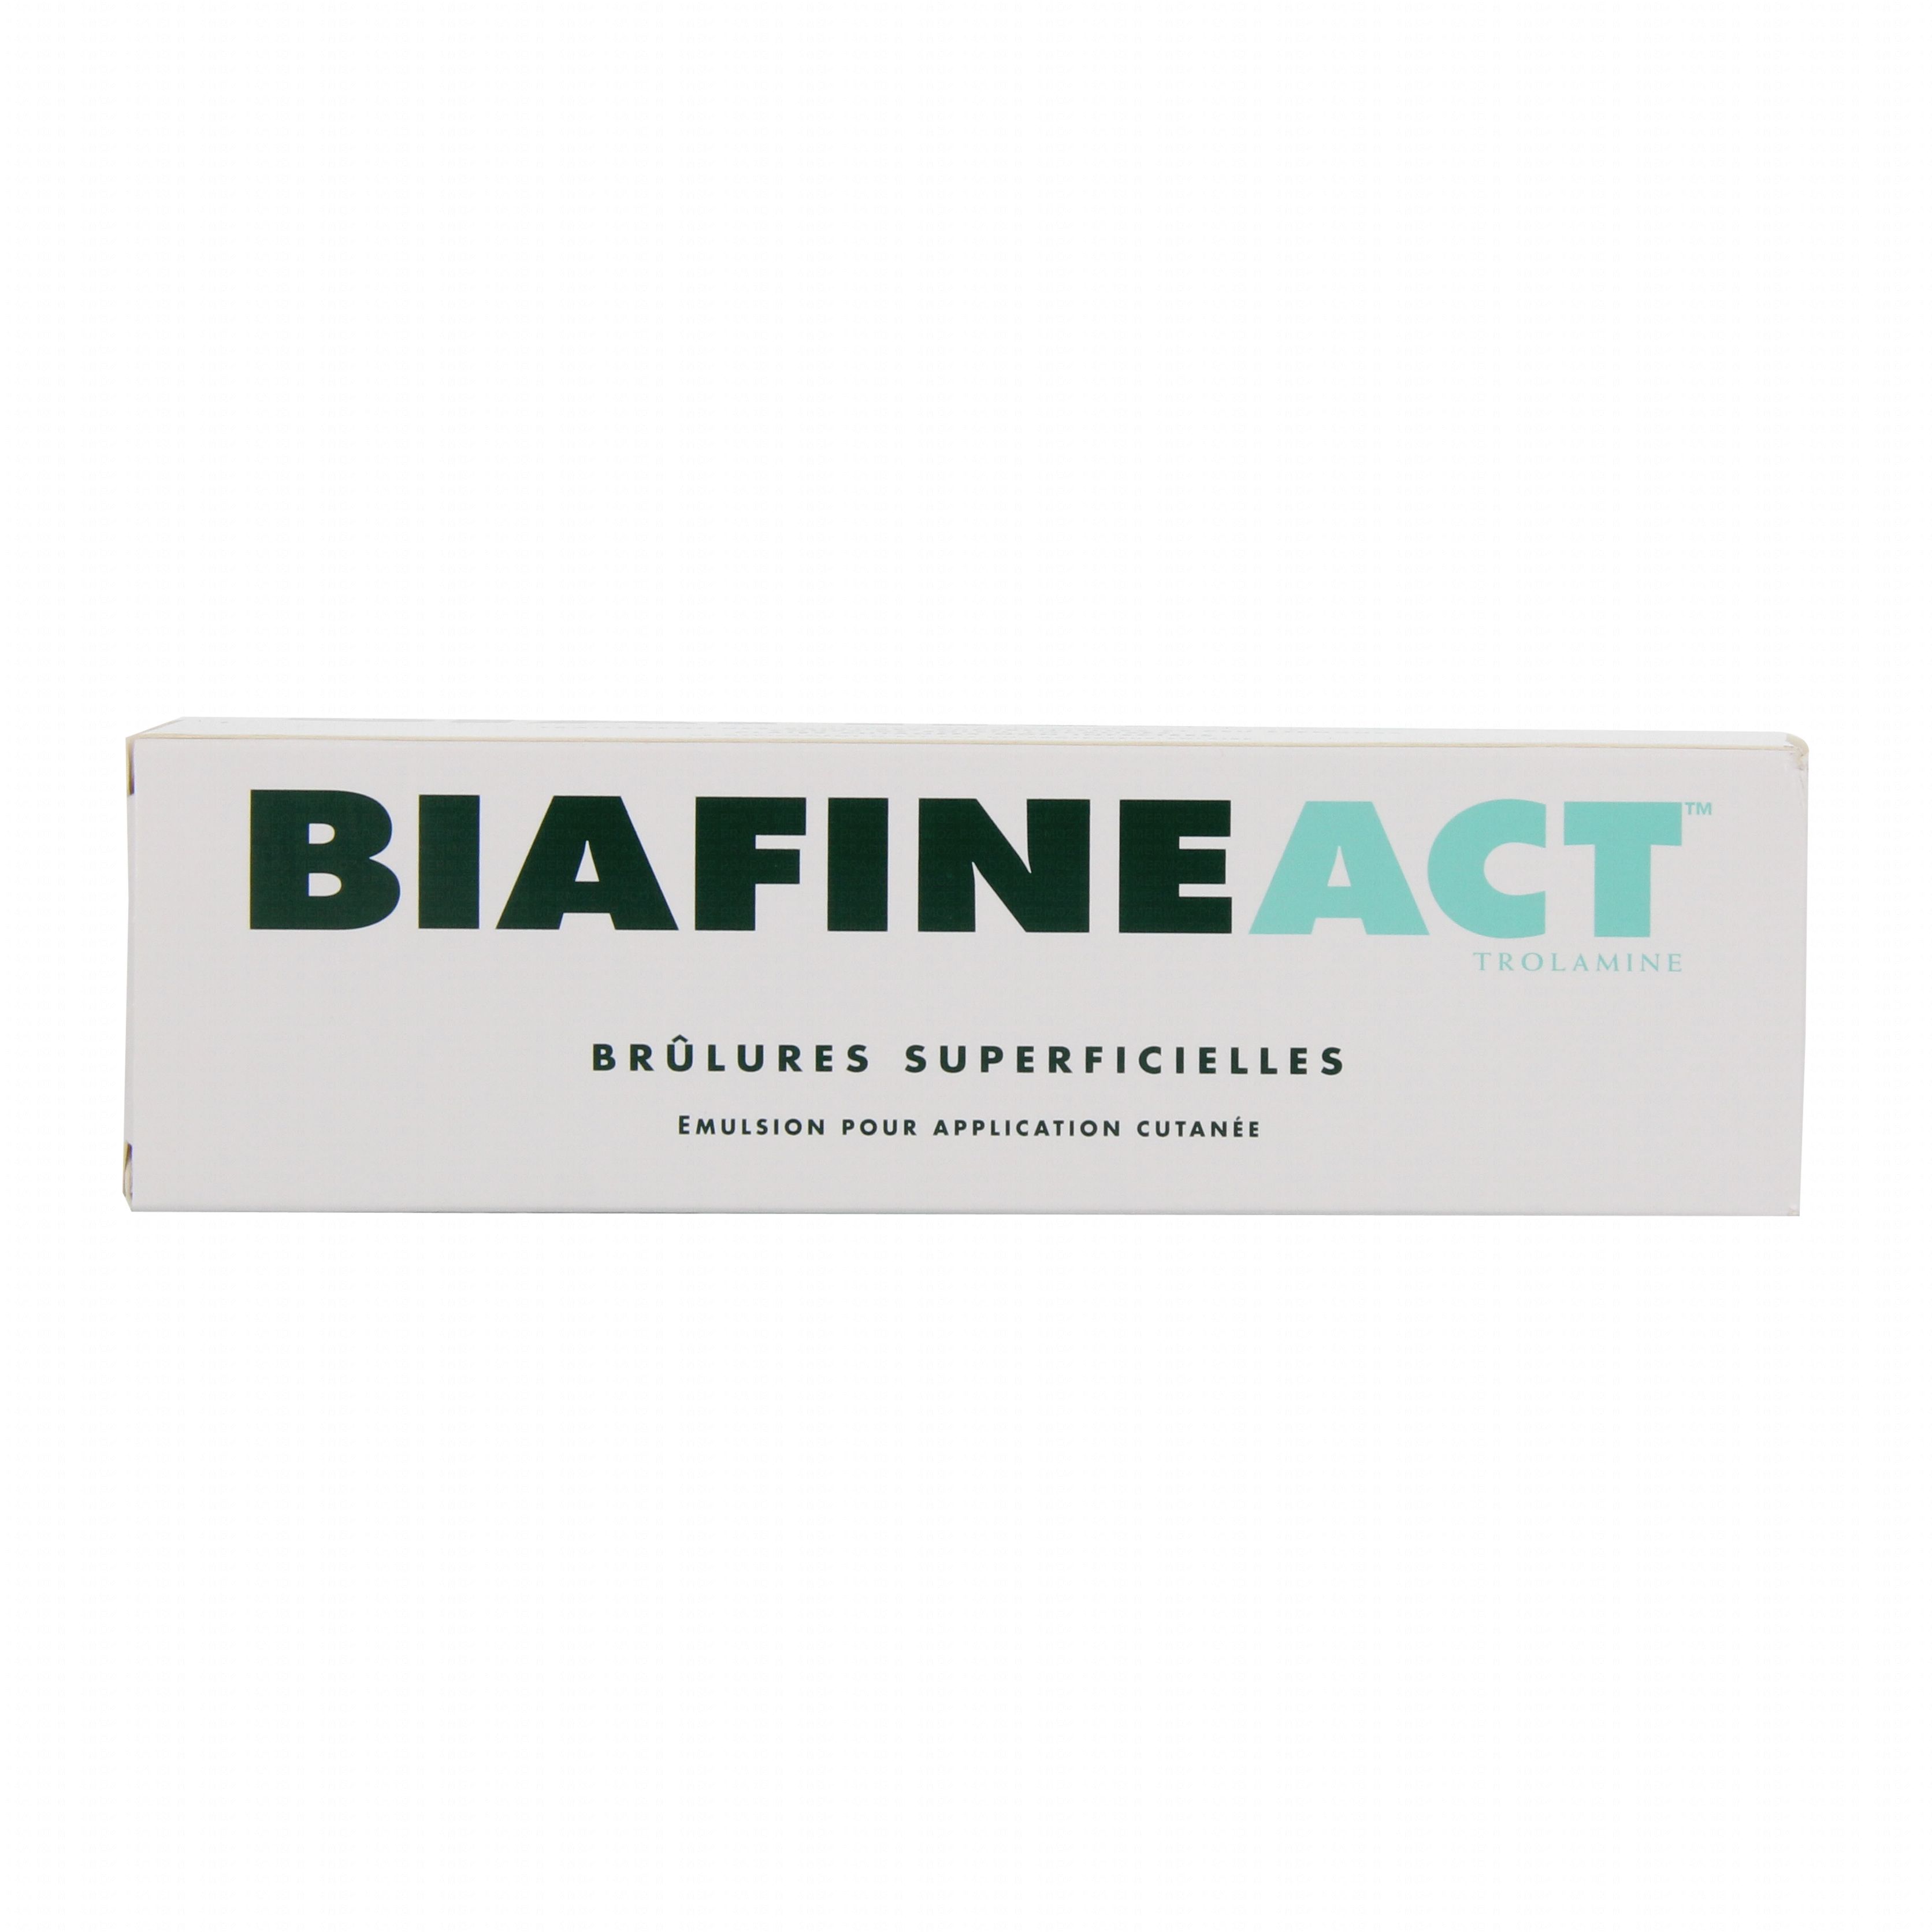 BIAFINE Act tube de 139,5 g - Médicament conseil - Pharmacie Prado Mermoz